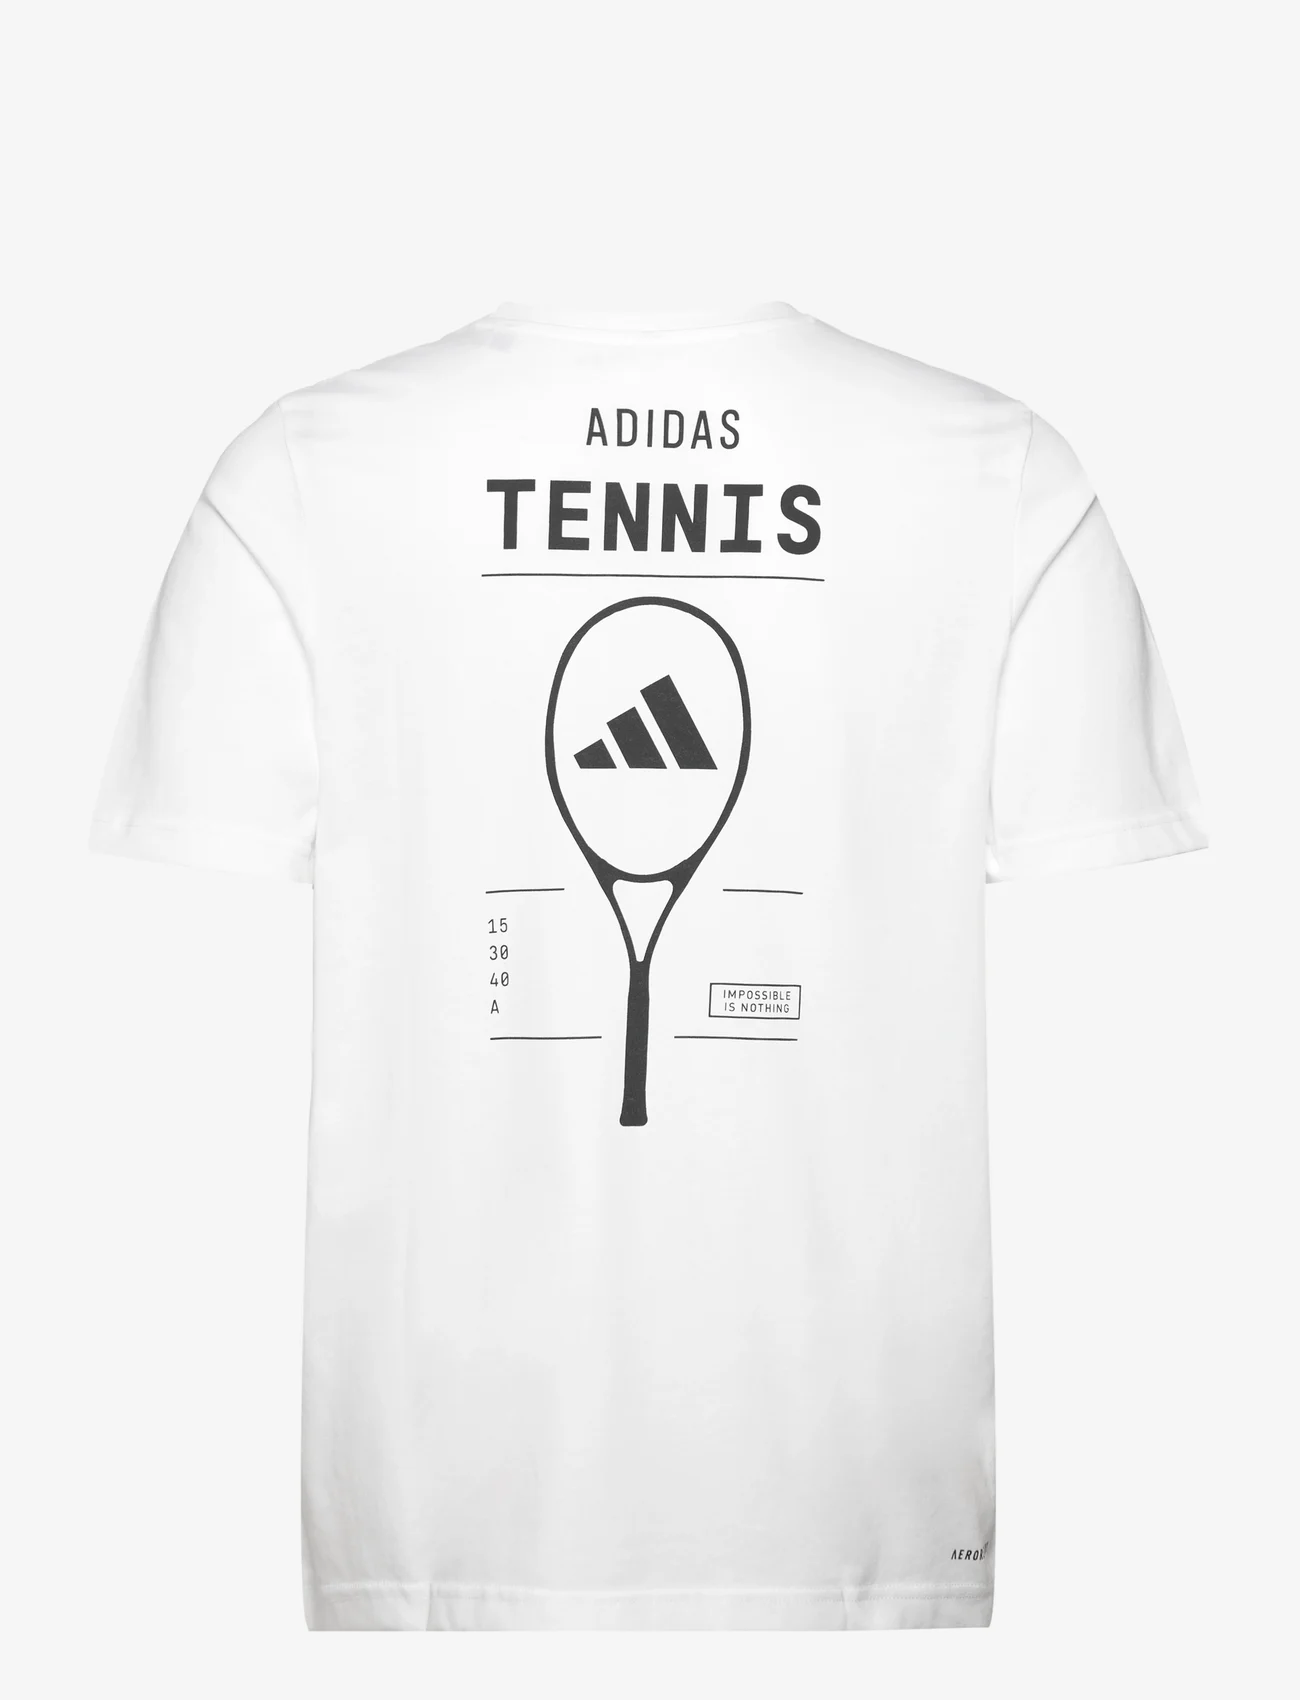 adidas Performance - TENNIS GRAPHIC TEE - short-sleeved t-shirts - 000/white - 1